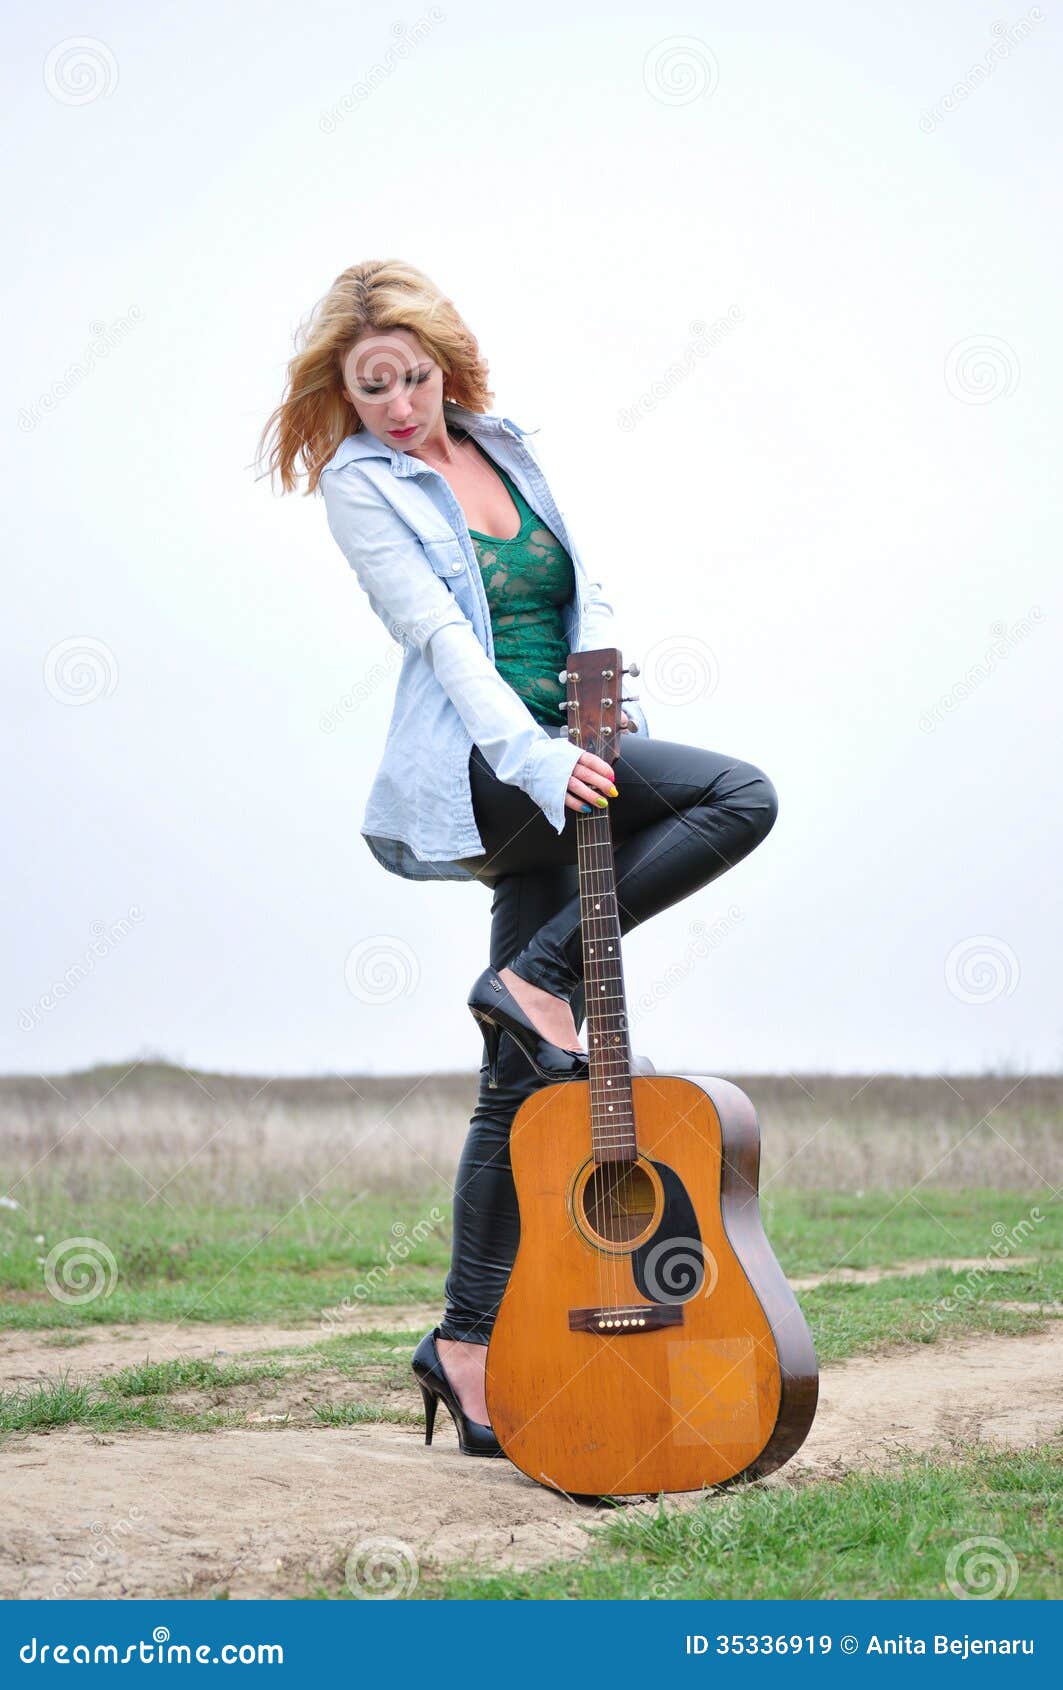 Portrait and Lifestlye Photography | Guitar girl, Musician photography,  Senior girls